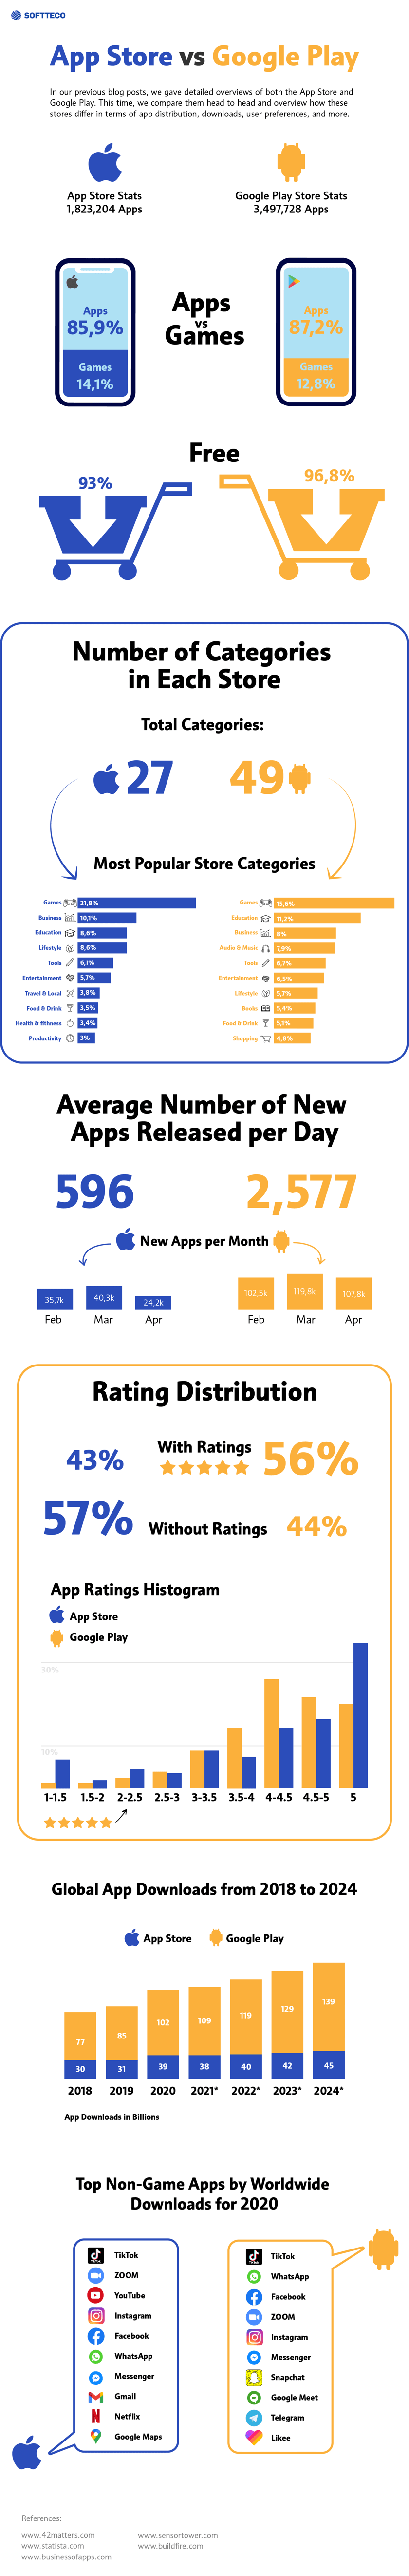 App Store vs Google Play Infographic